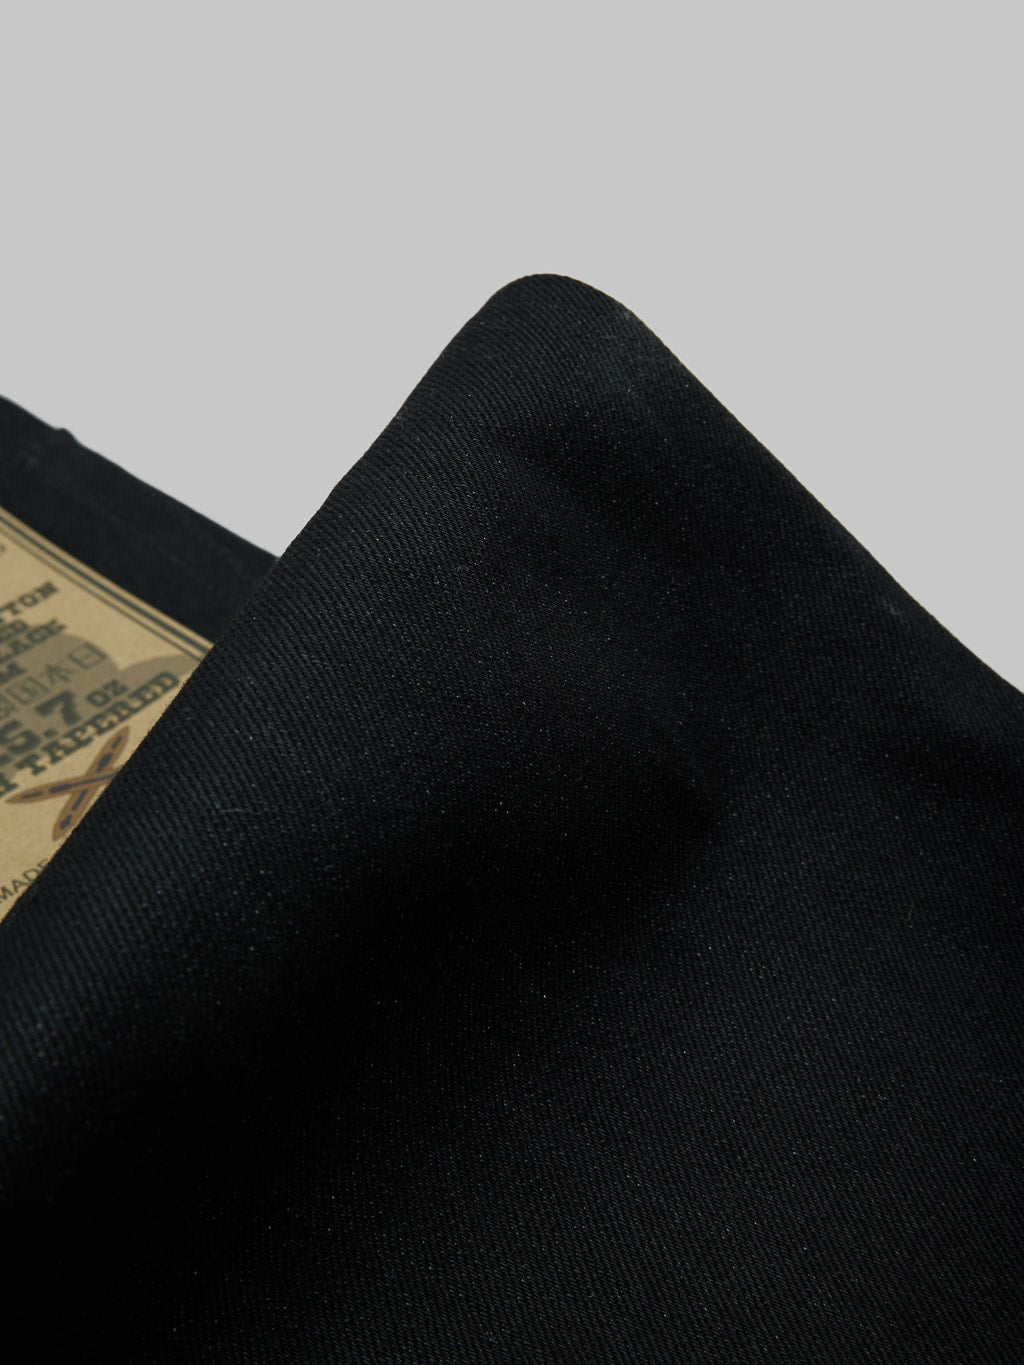 momotaro 0405b selvedge black denim high tapered jeans 100 cotton